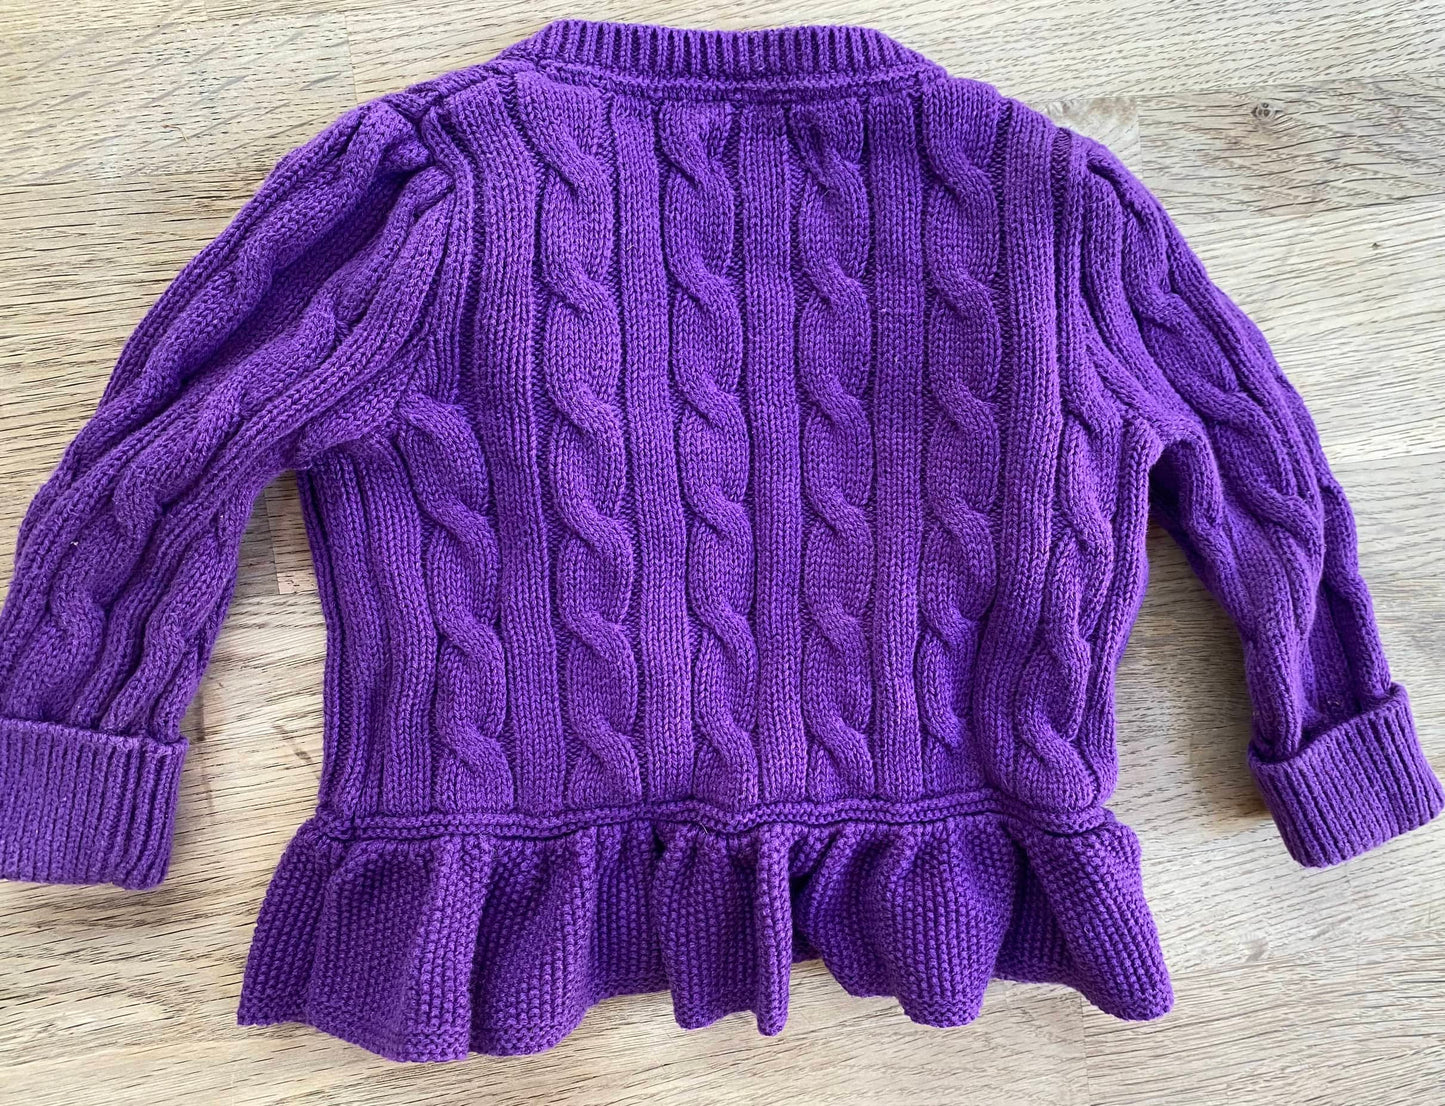 Purple Ralph Lauren Cable Knit Peplum Cardigan (Pre-Loved) Size 6M